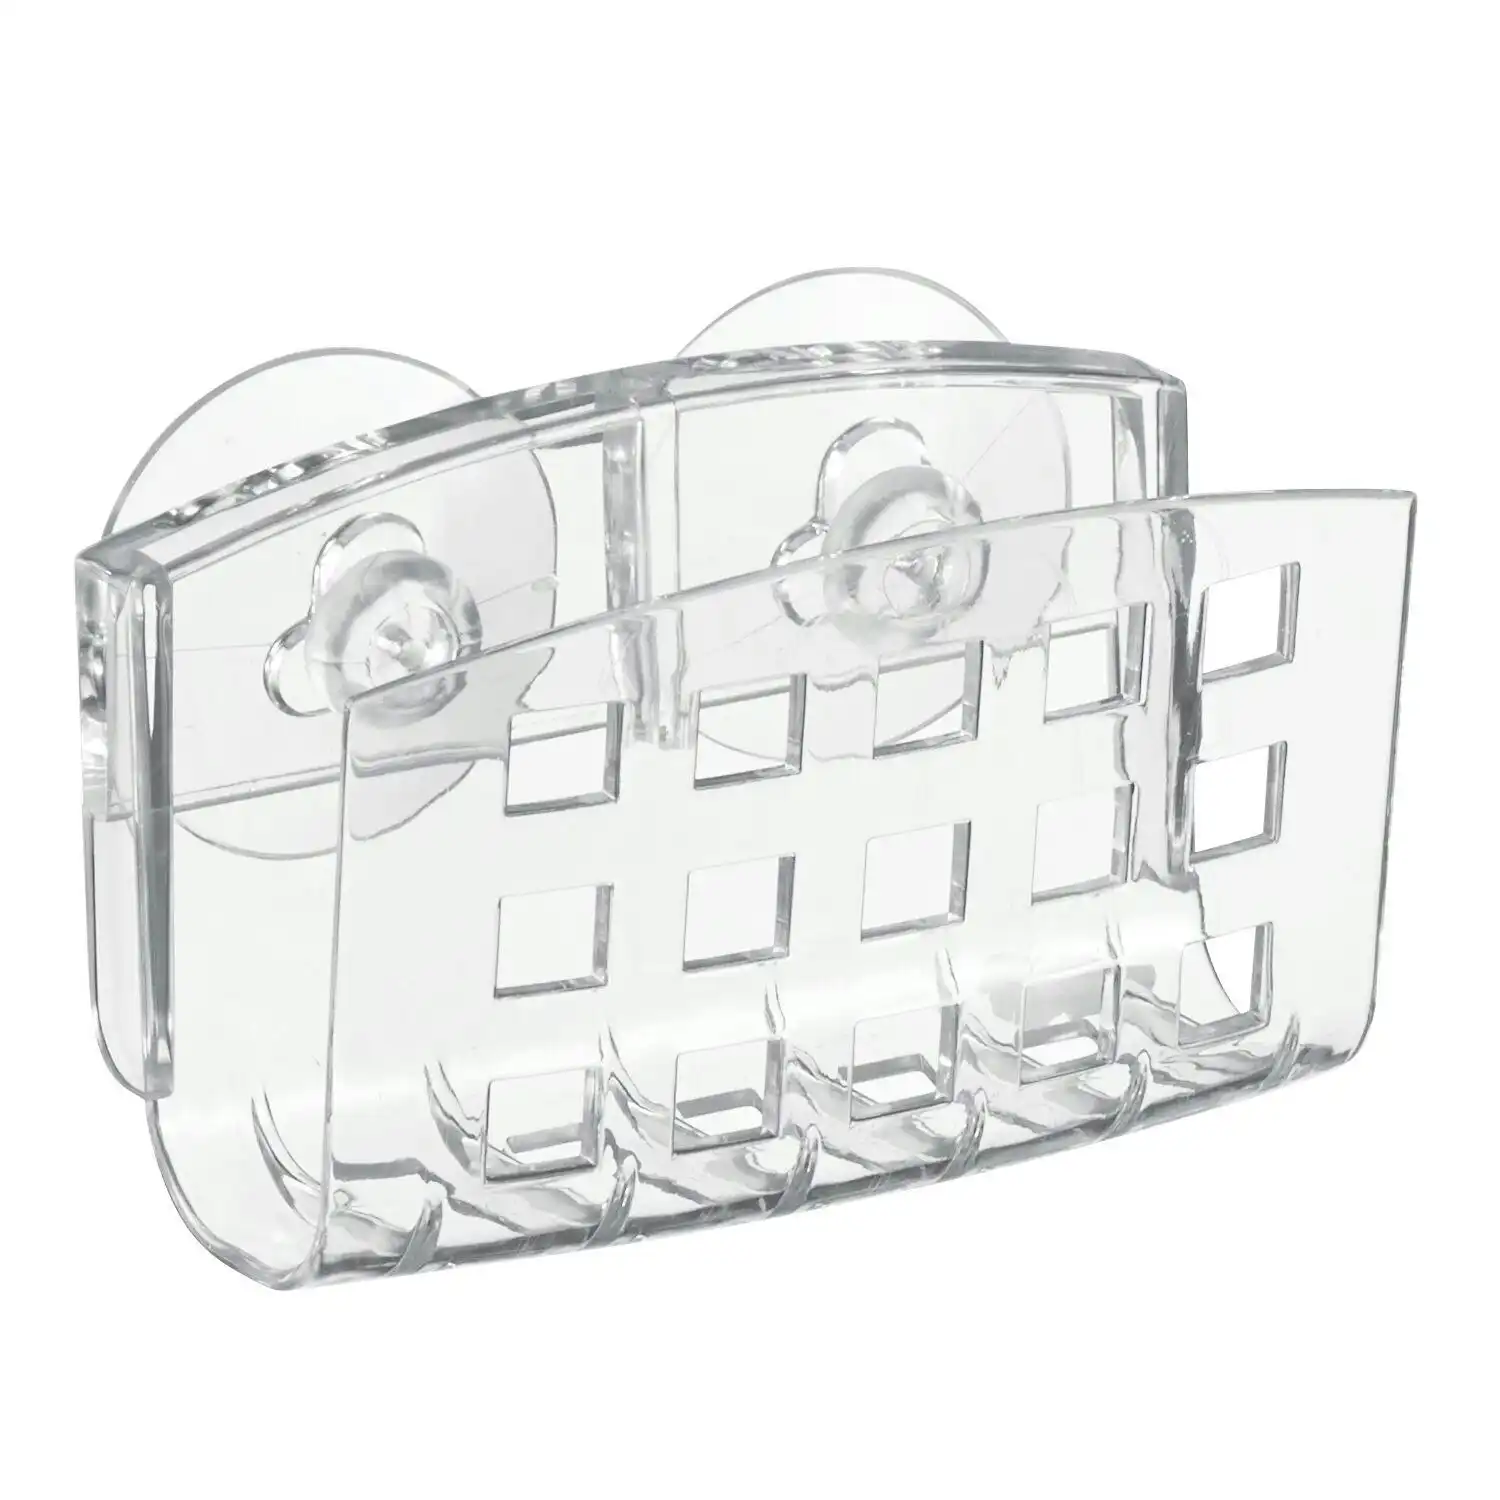 2x Idesign Classic Dual Suction Soap Cradle 10cm Organiser Holder Storage Clear